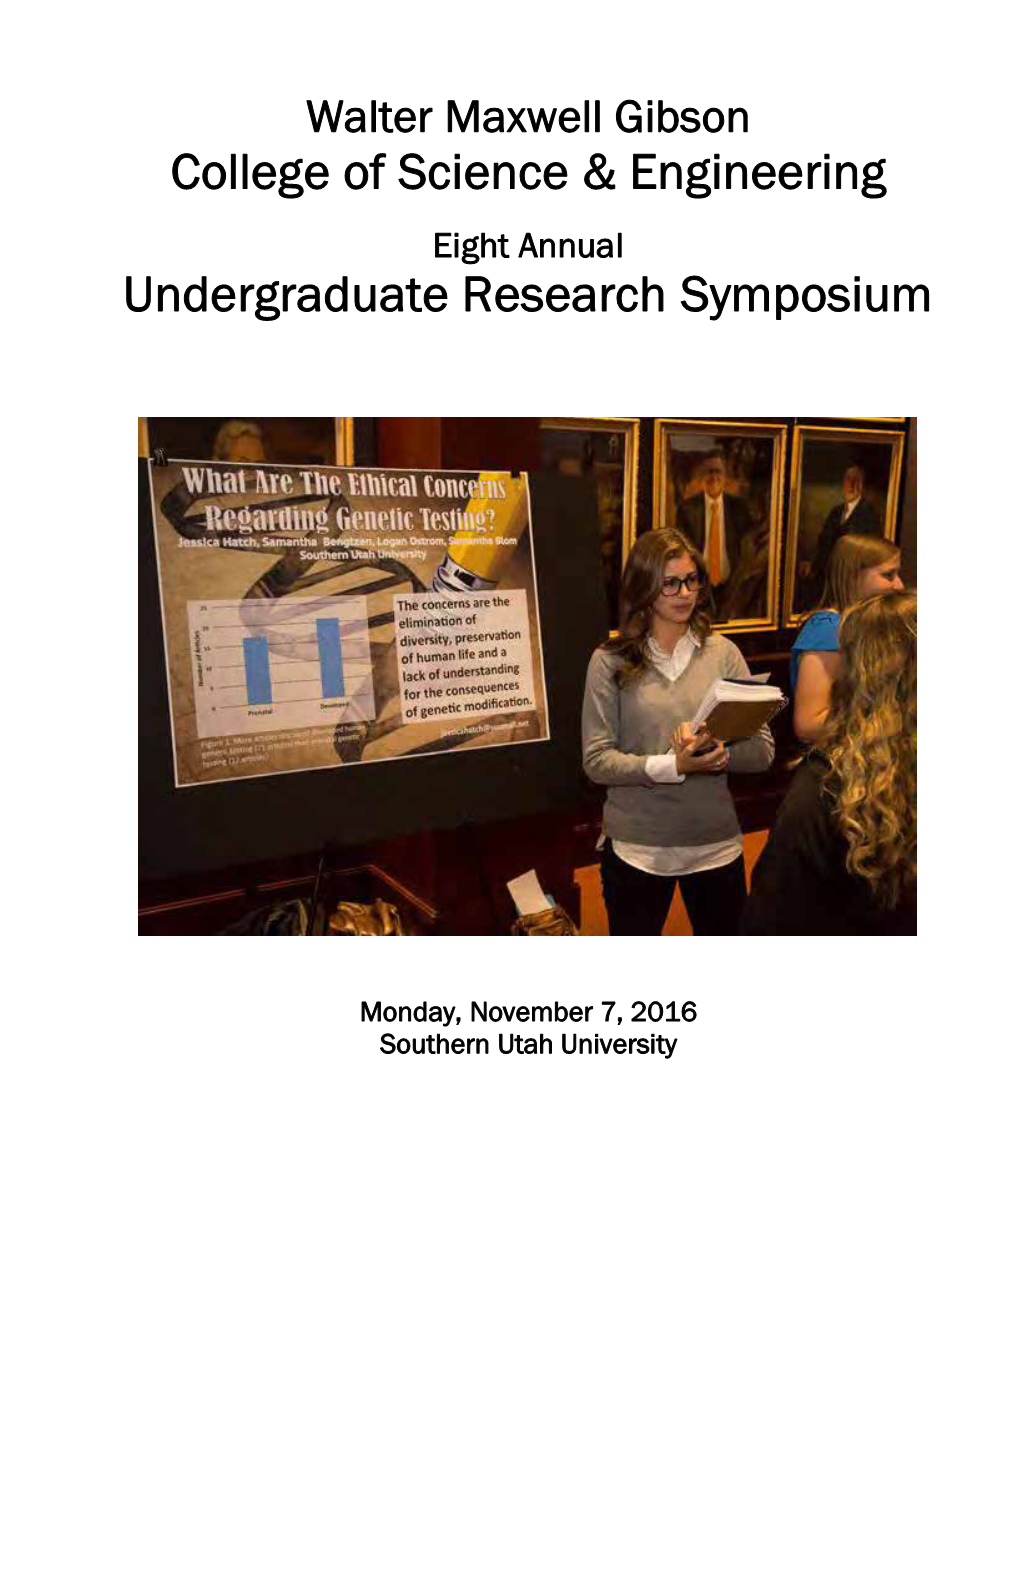 College of Science & Engineering Undergraduate Research Symposium